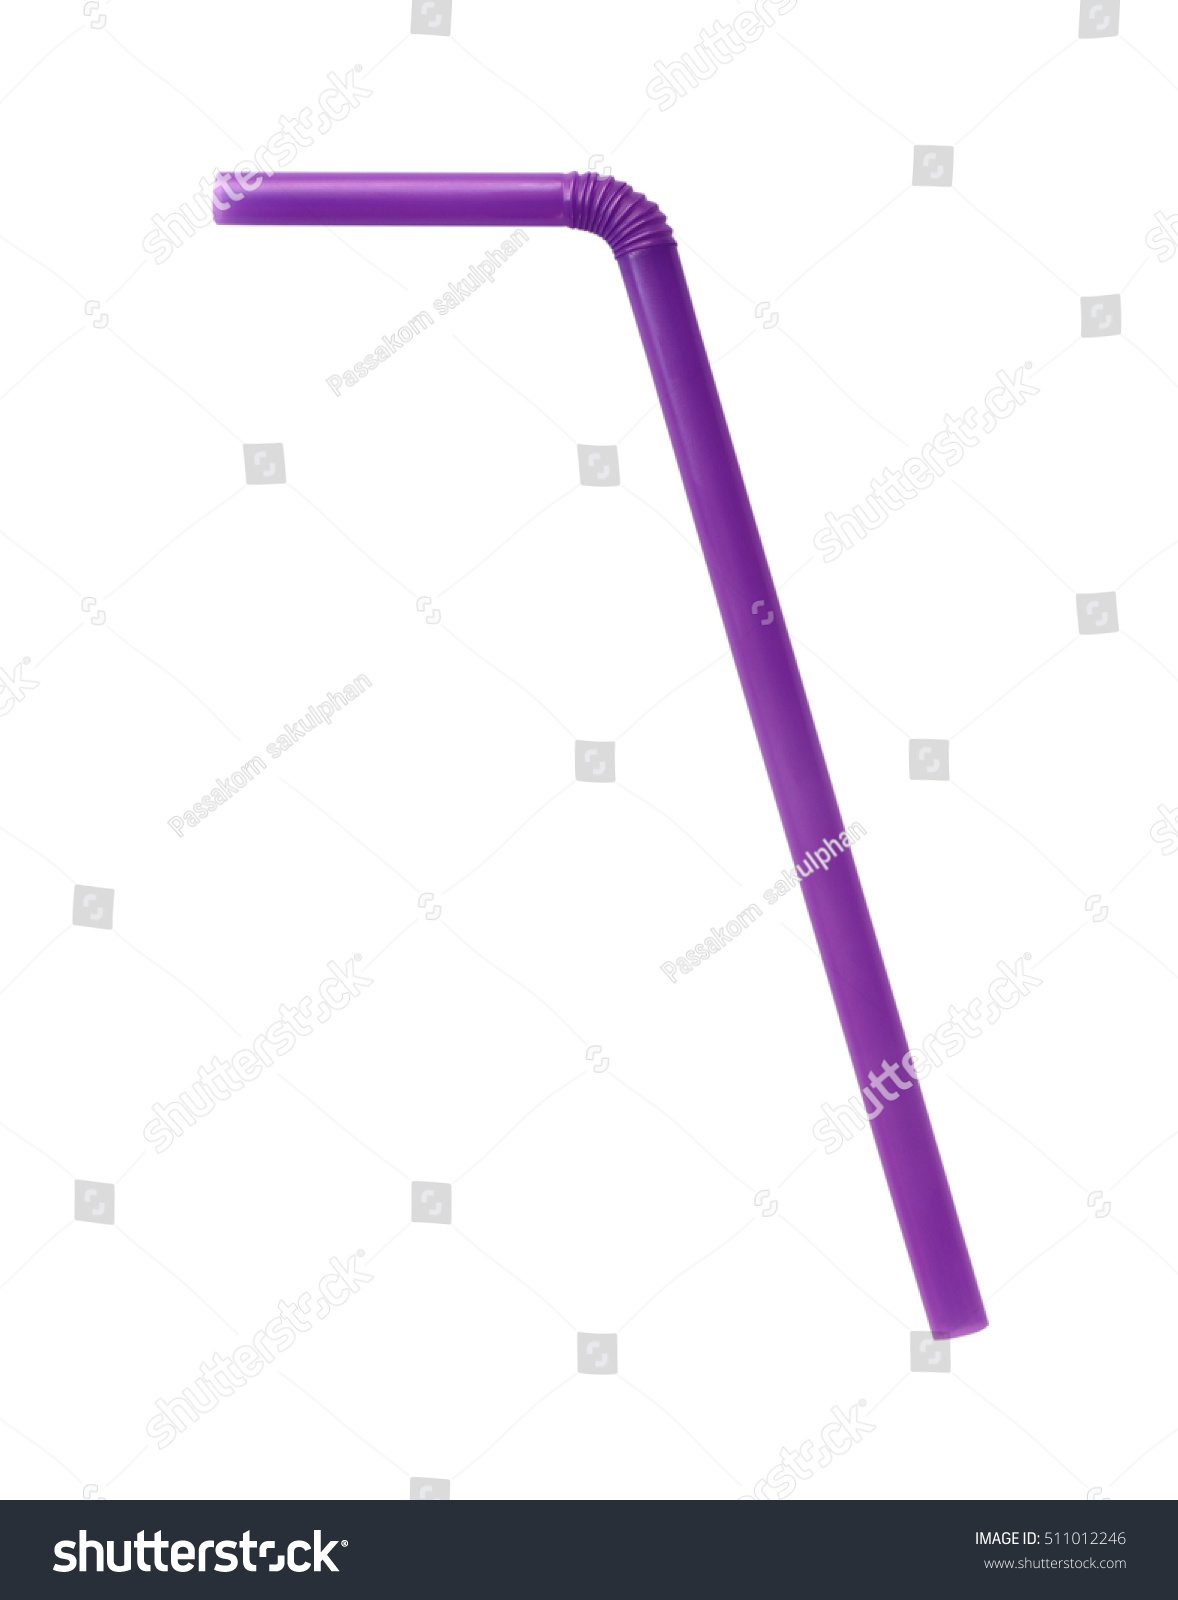 Purple straw isolated on white background #511012246